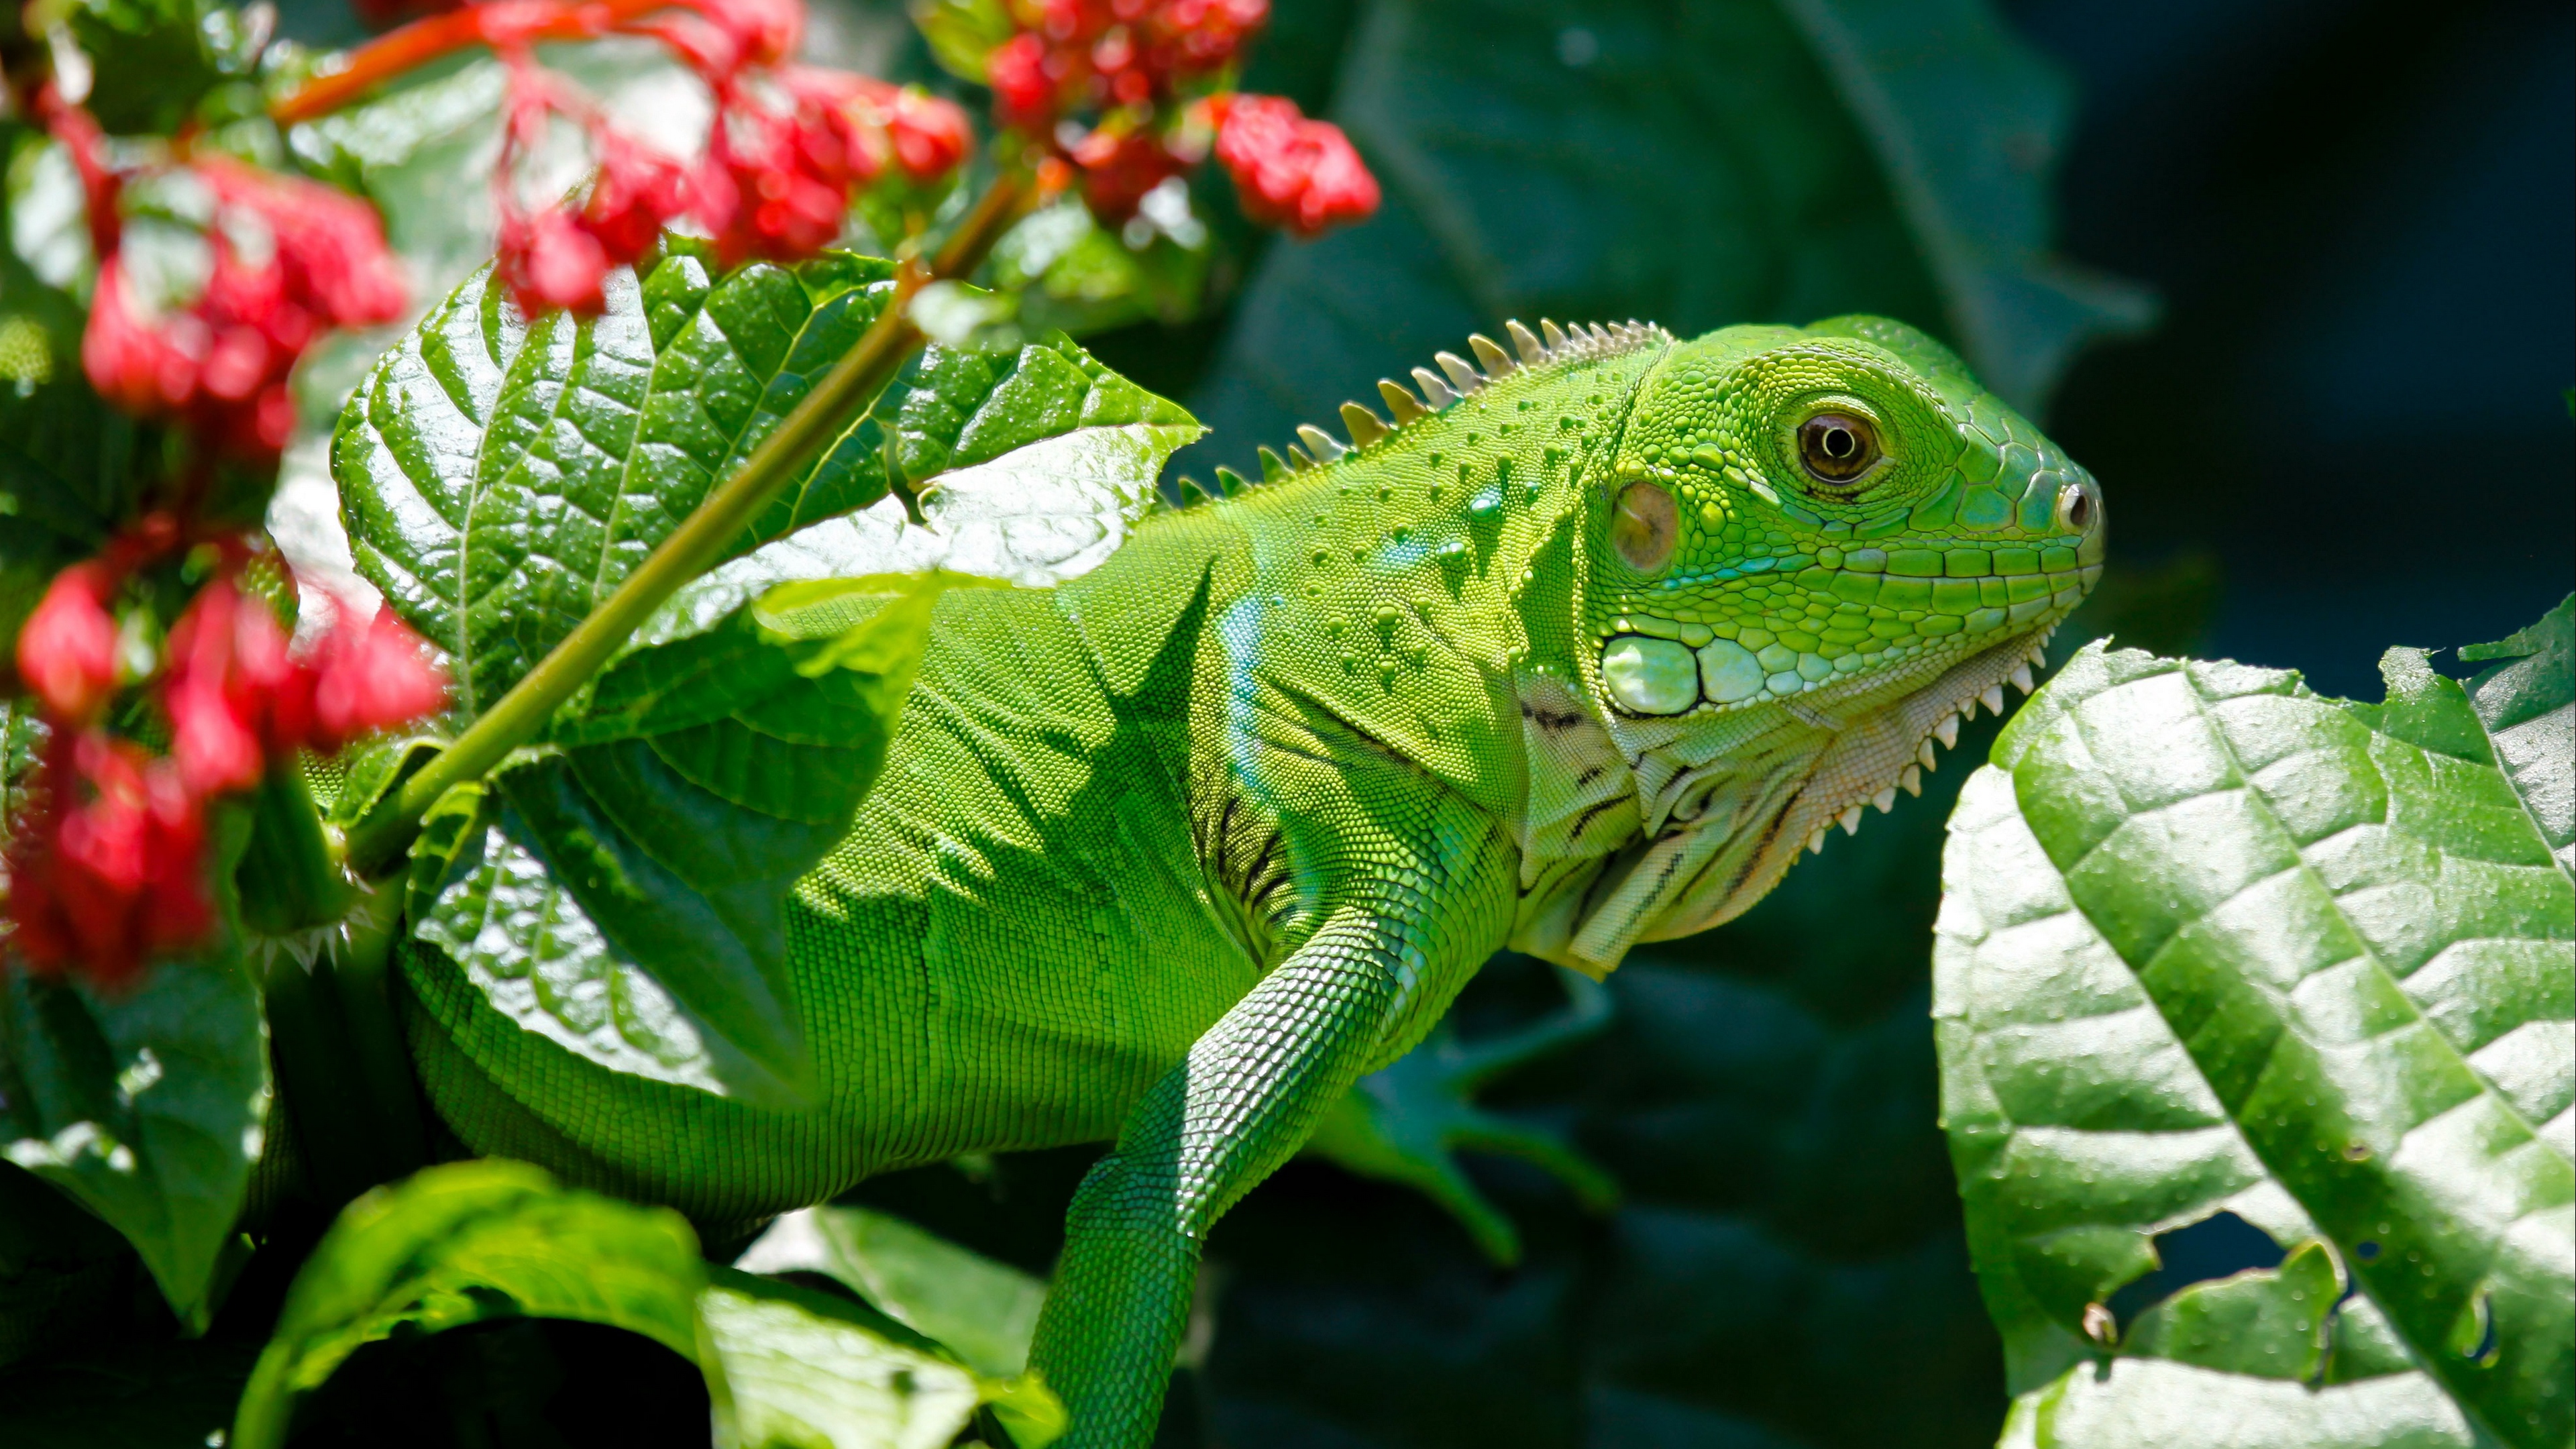 iguana reptile lizard flower leaf 4k 1542242255 - iguana, reptile, lizard, flower, leaf 4k - reptile, Lizard, iguana